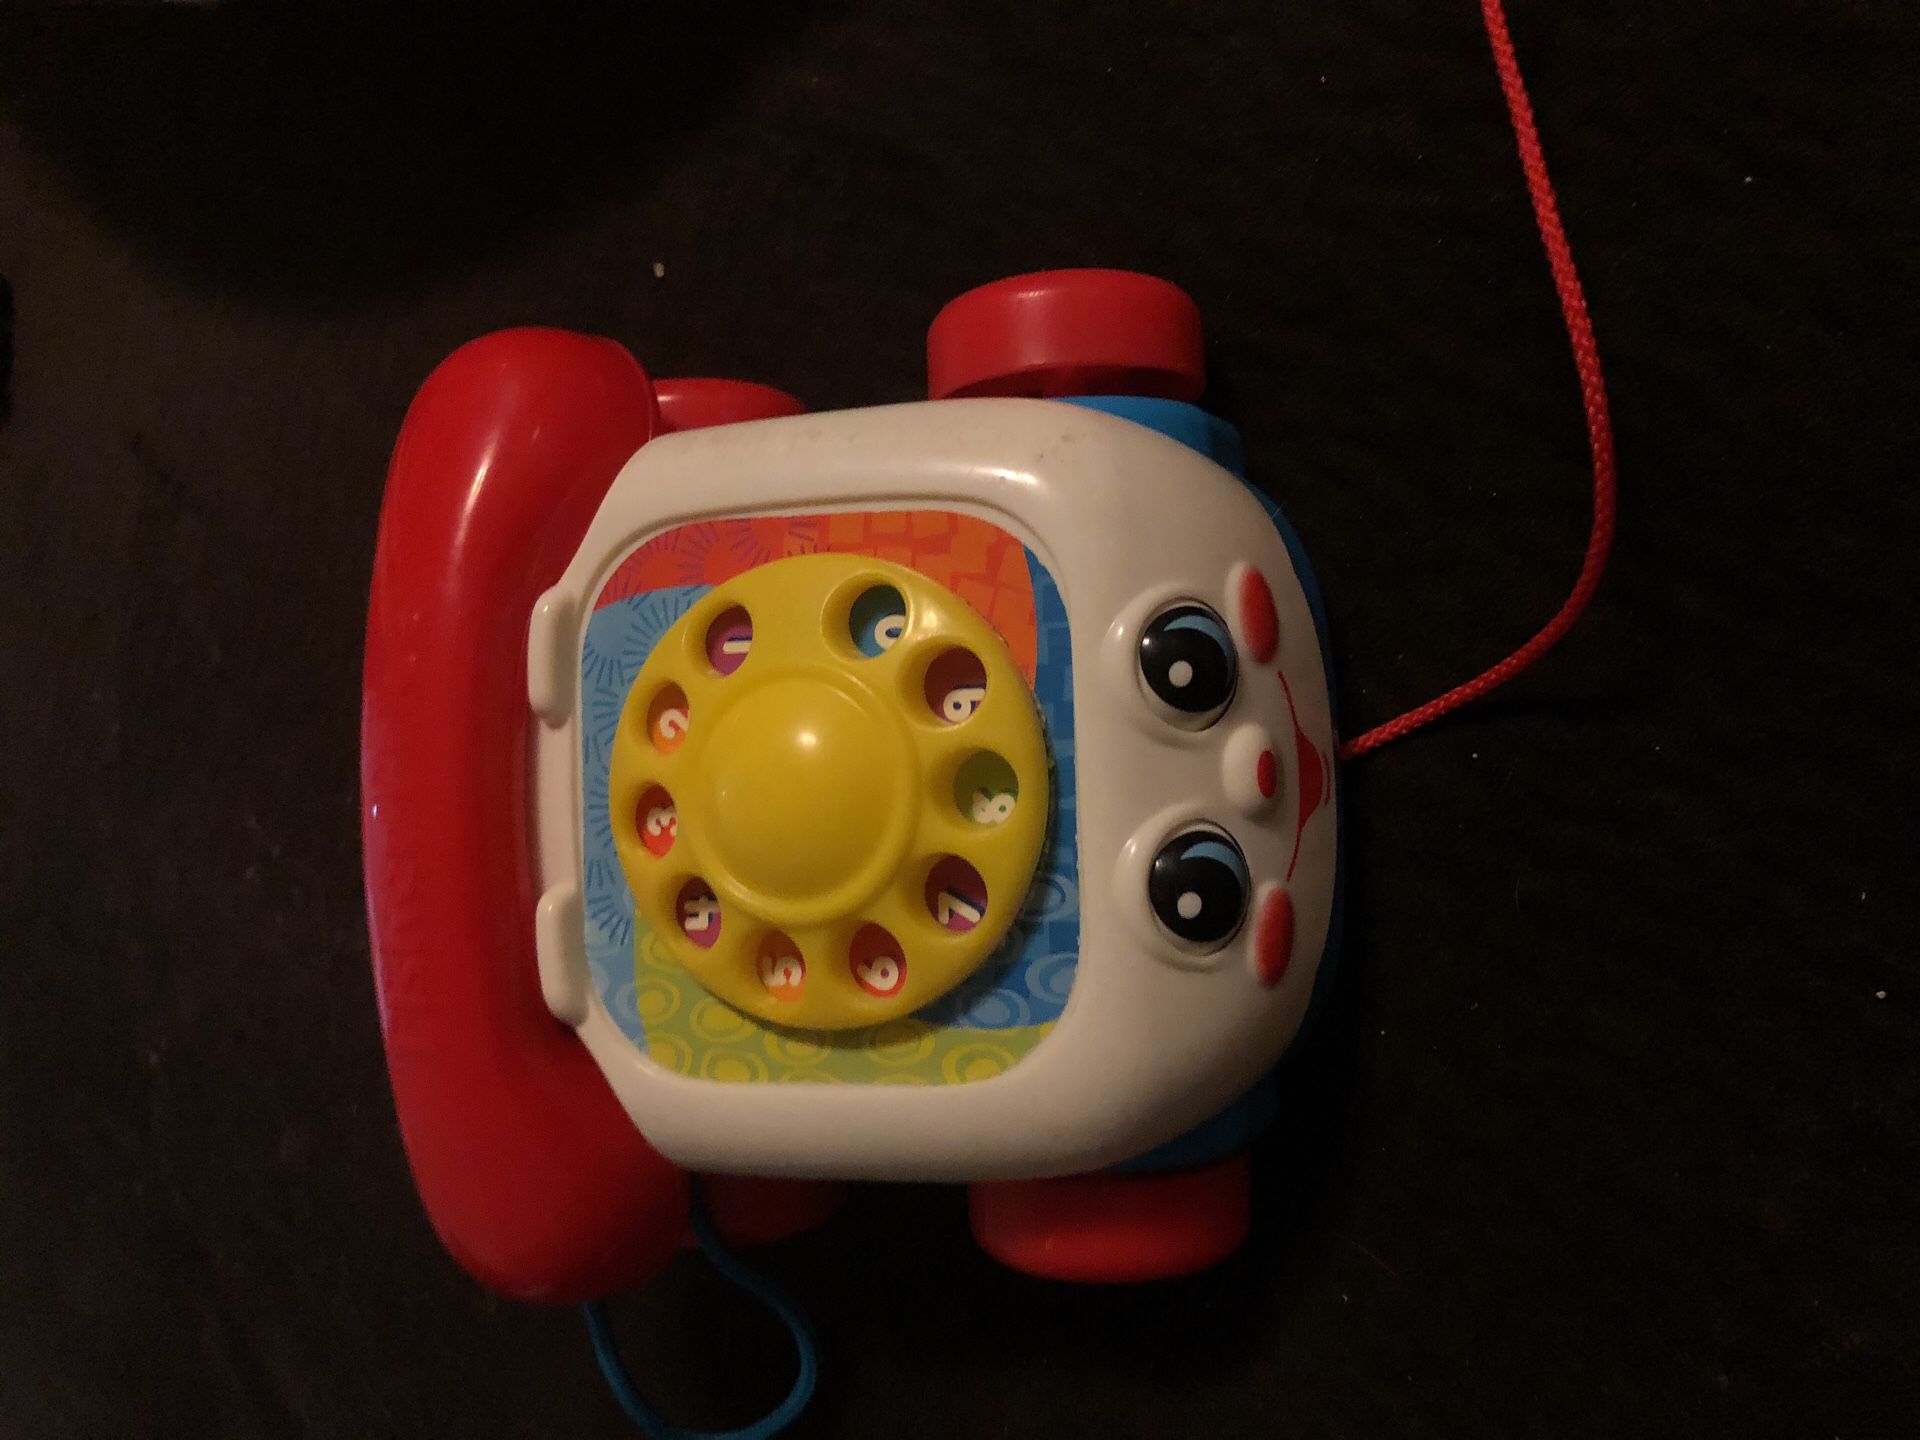 Toy phone FREE